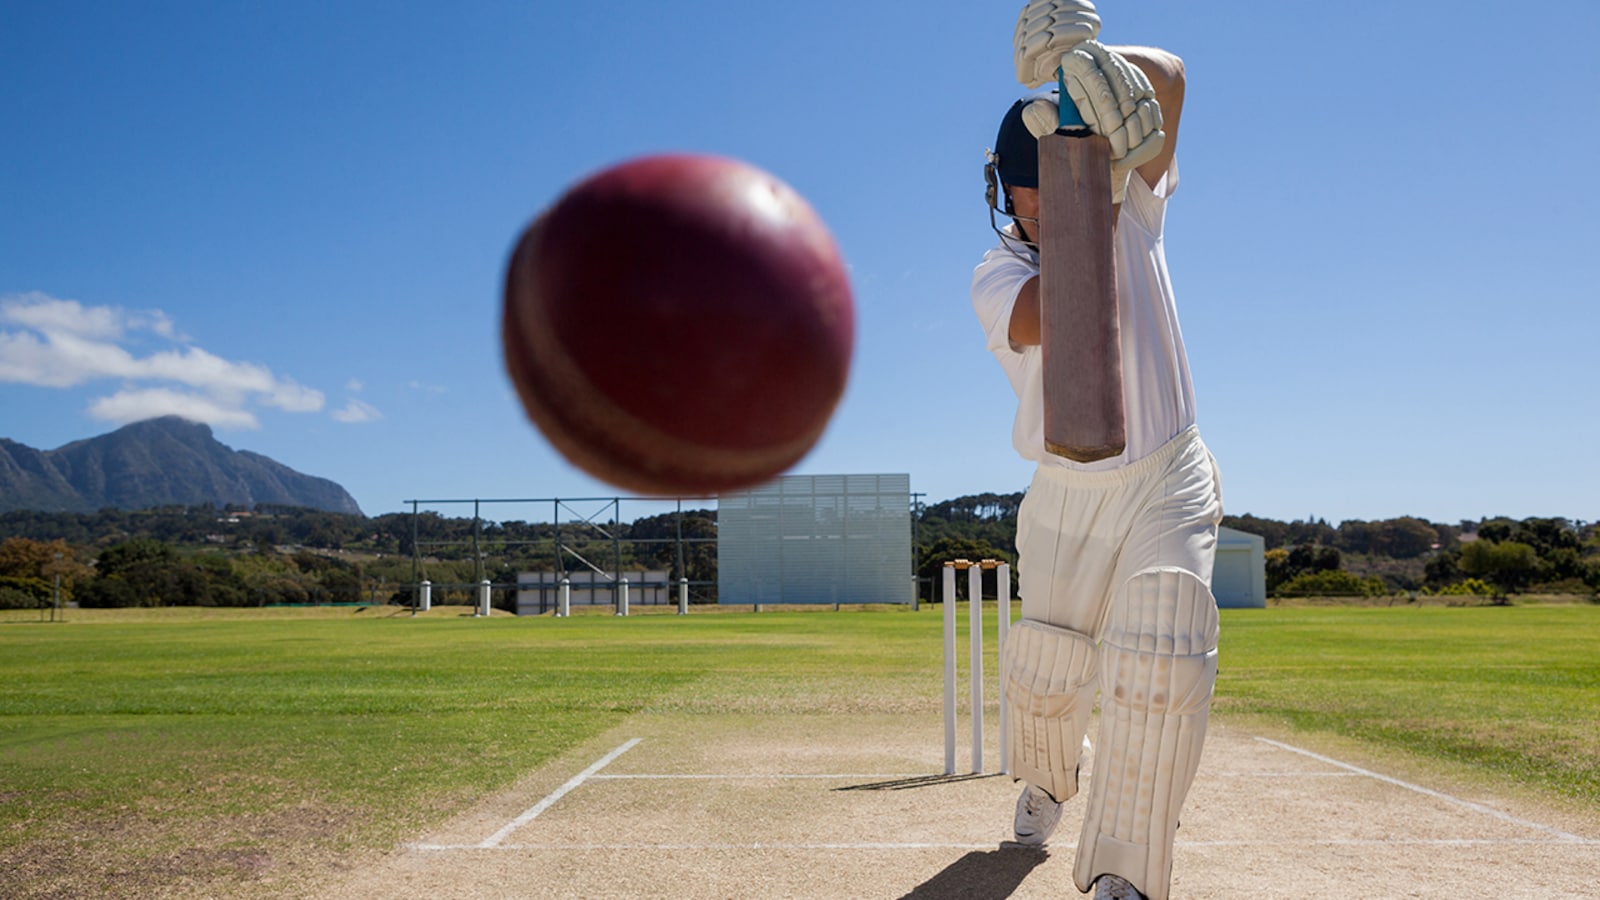 Can Microsoft's Satya Nadella Sell Cricket in America? - Bloomberg